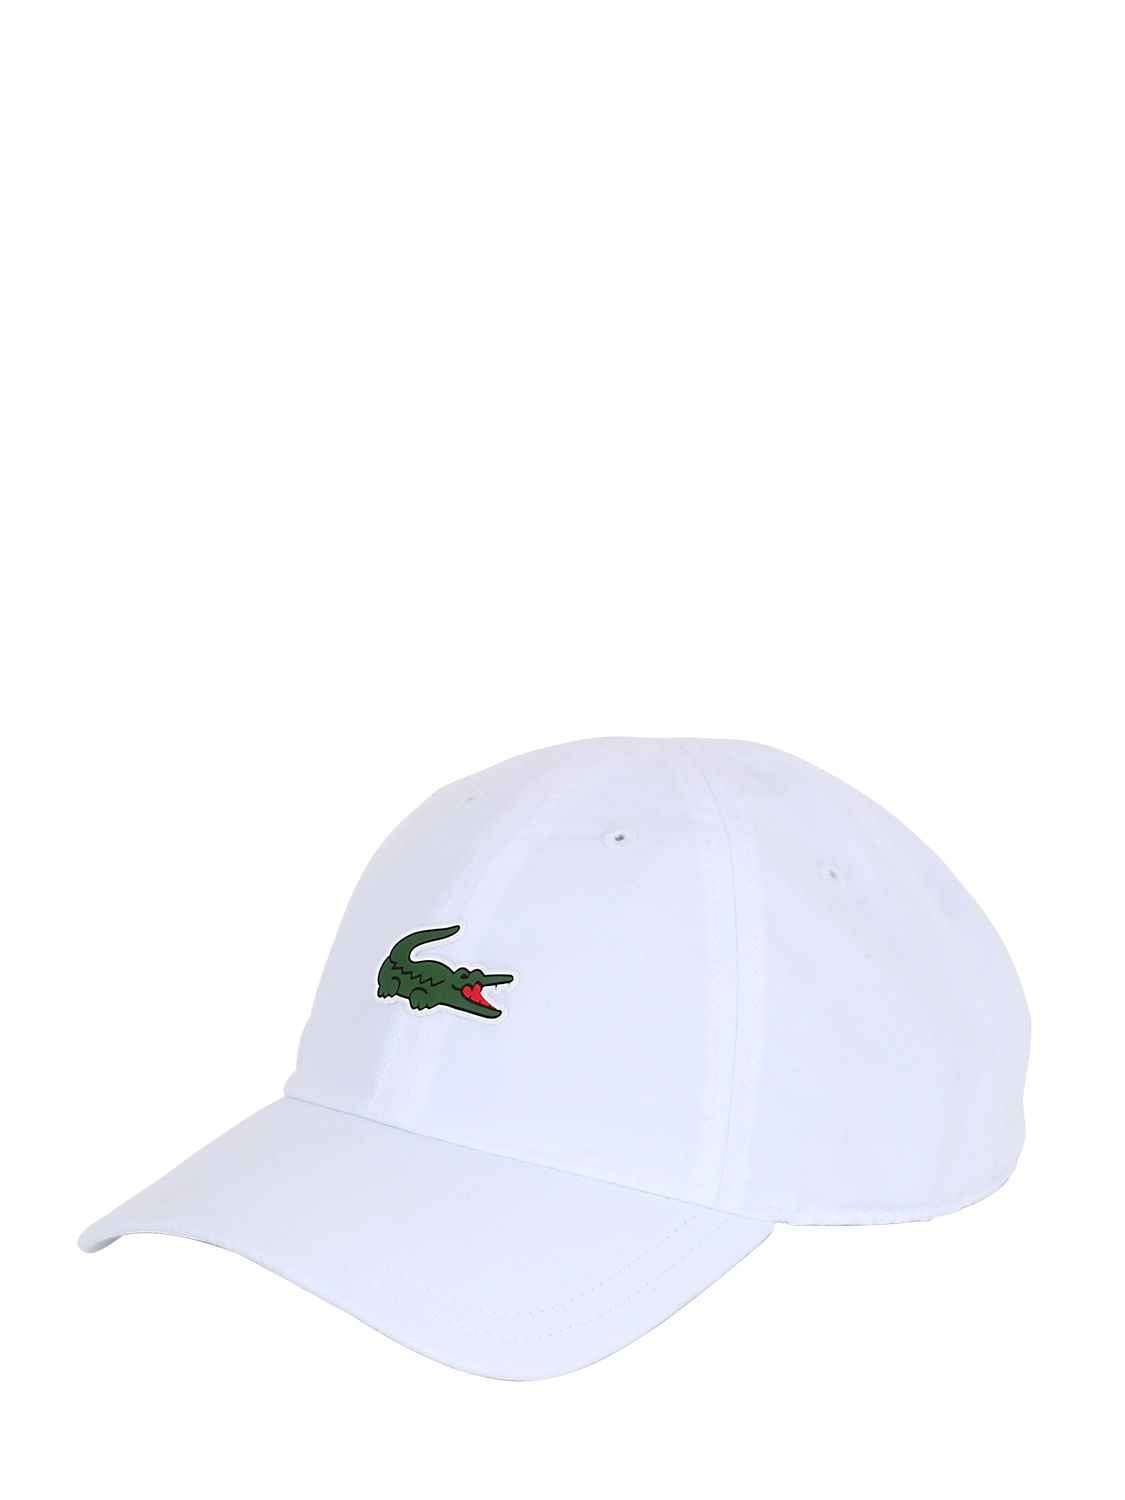 white lacoste hat